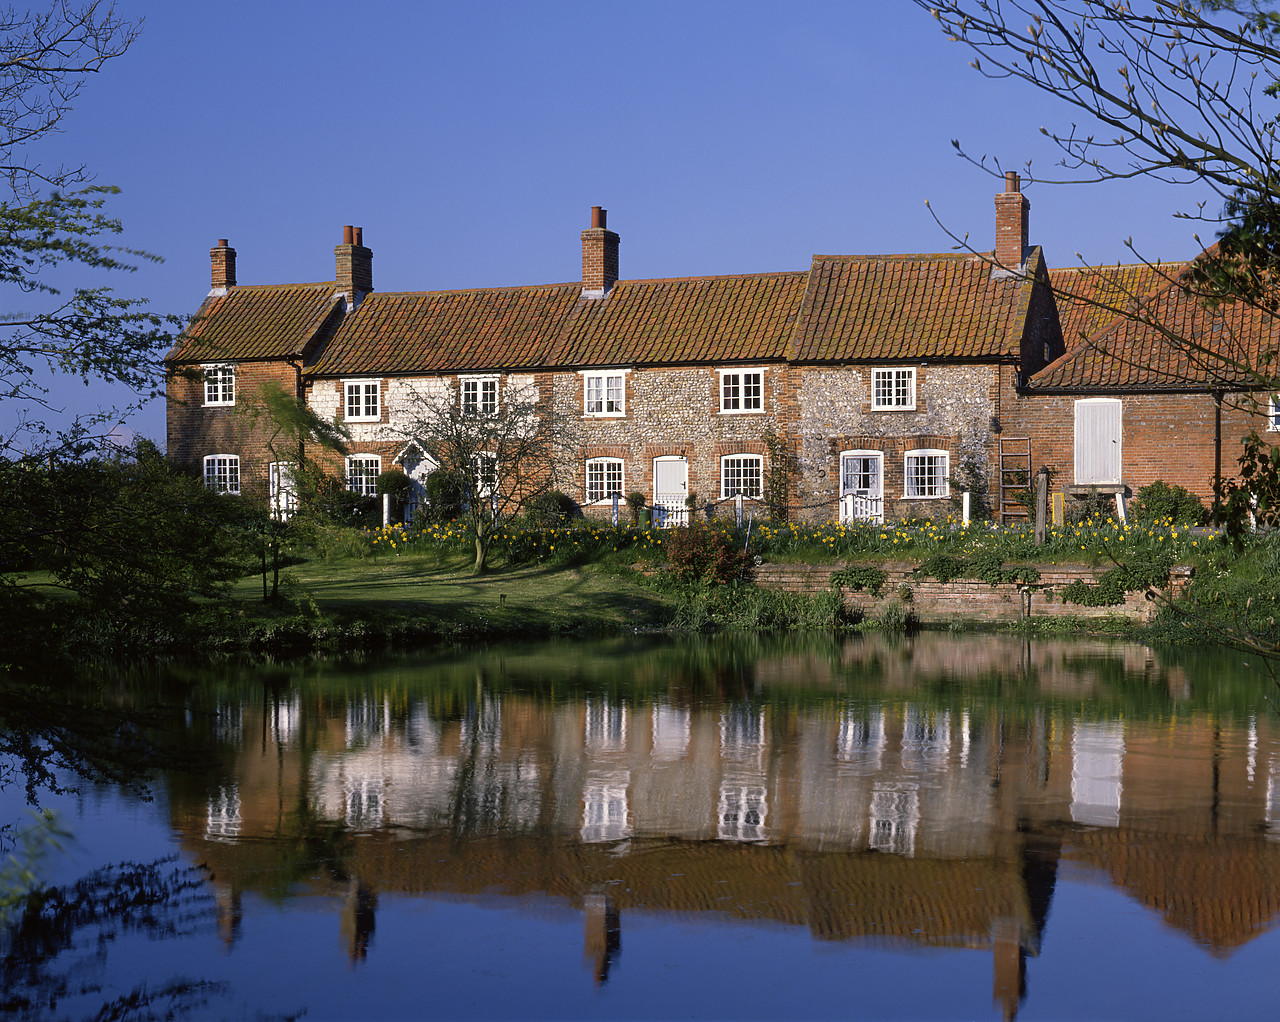 #902731 - Flint Cottages Reflecting in River Burn, Burnham Overy, Norfolk, England